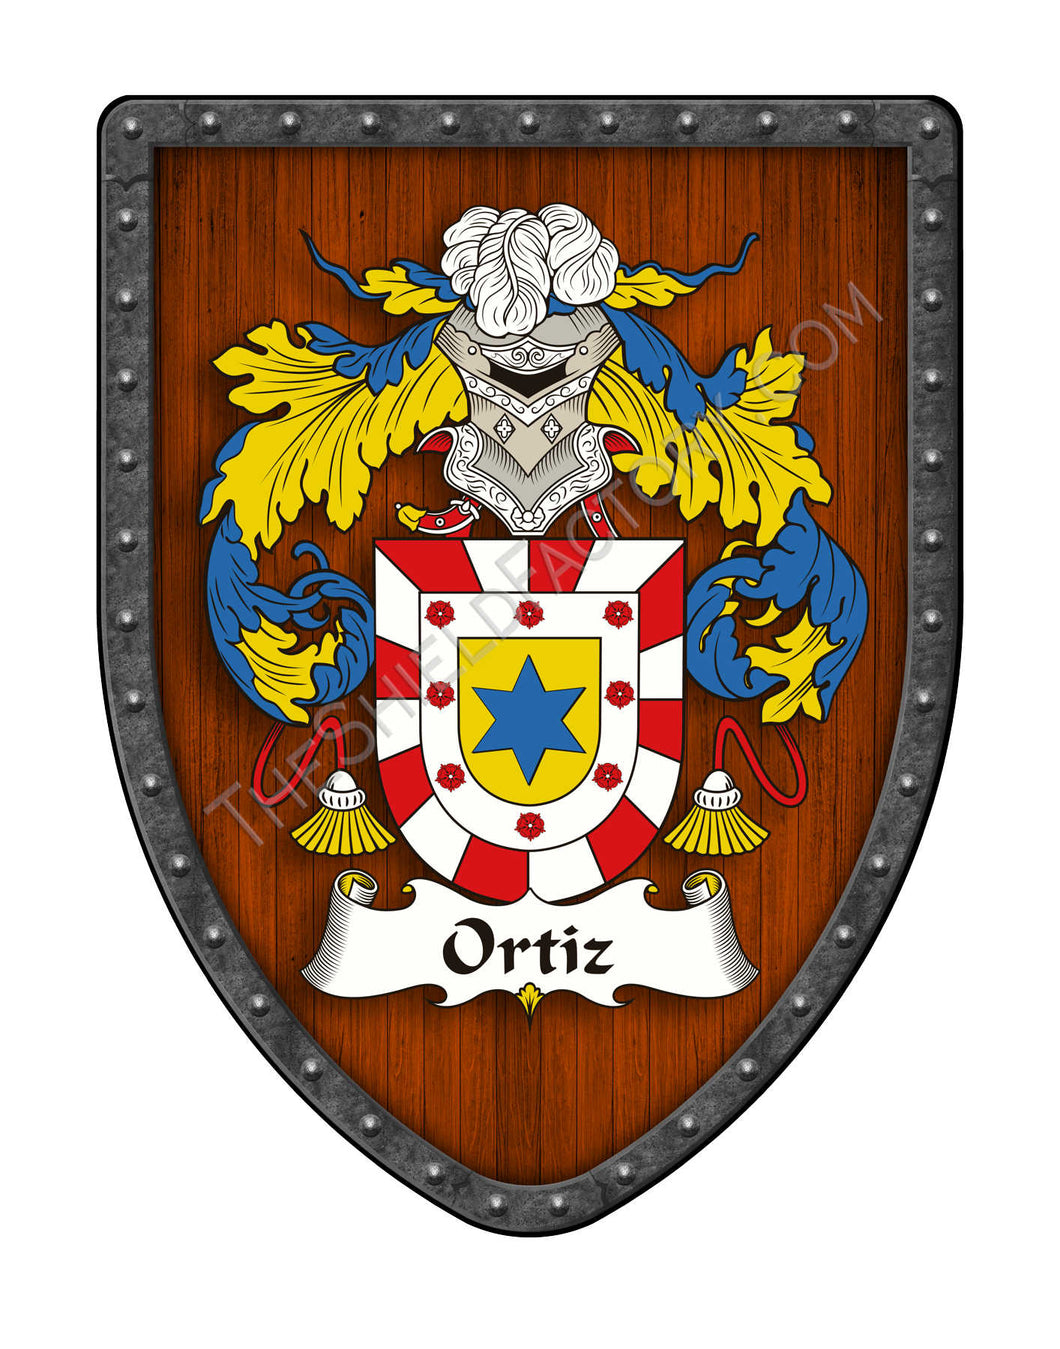 Ortiz Coat of Arms